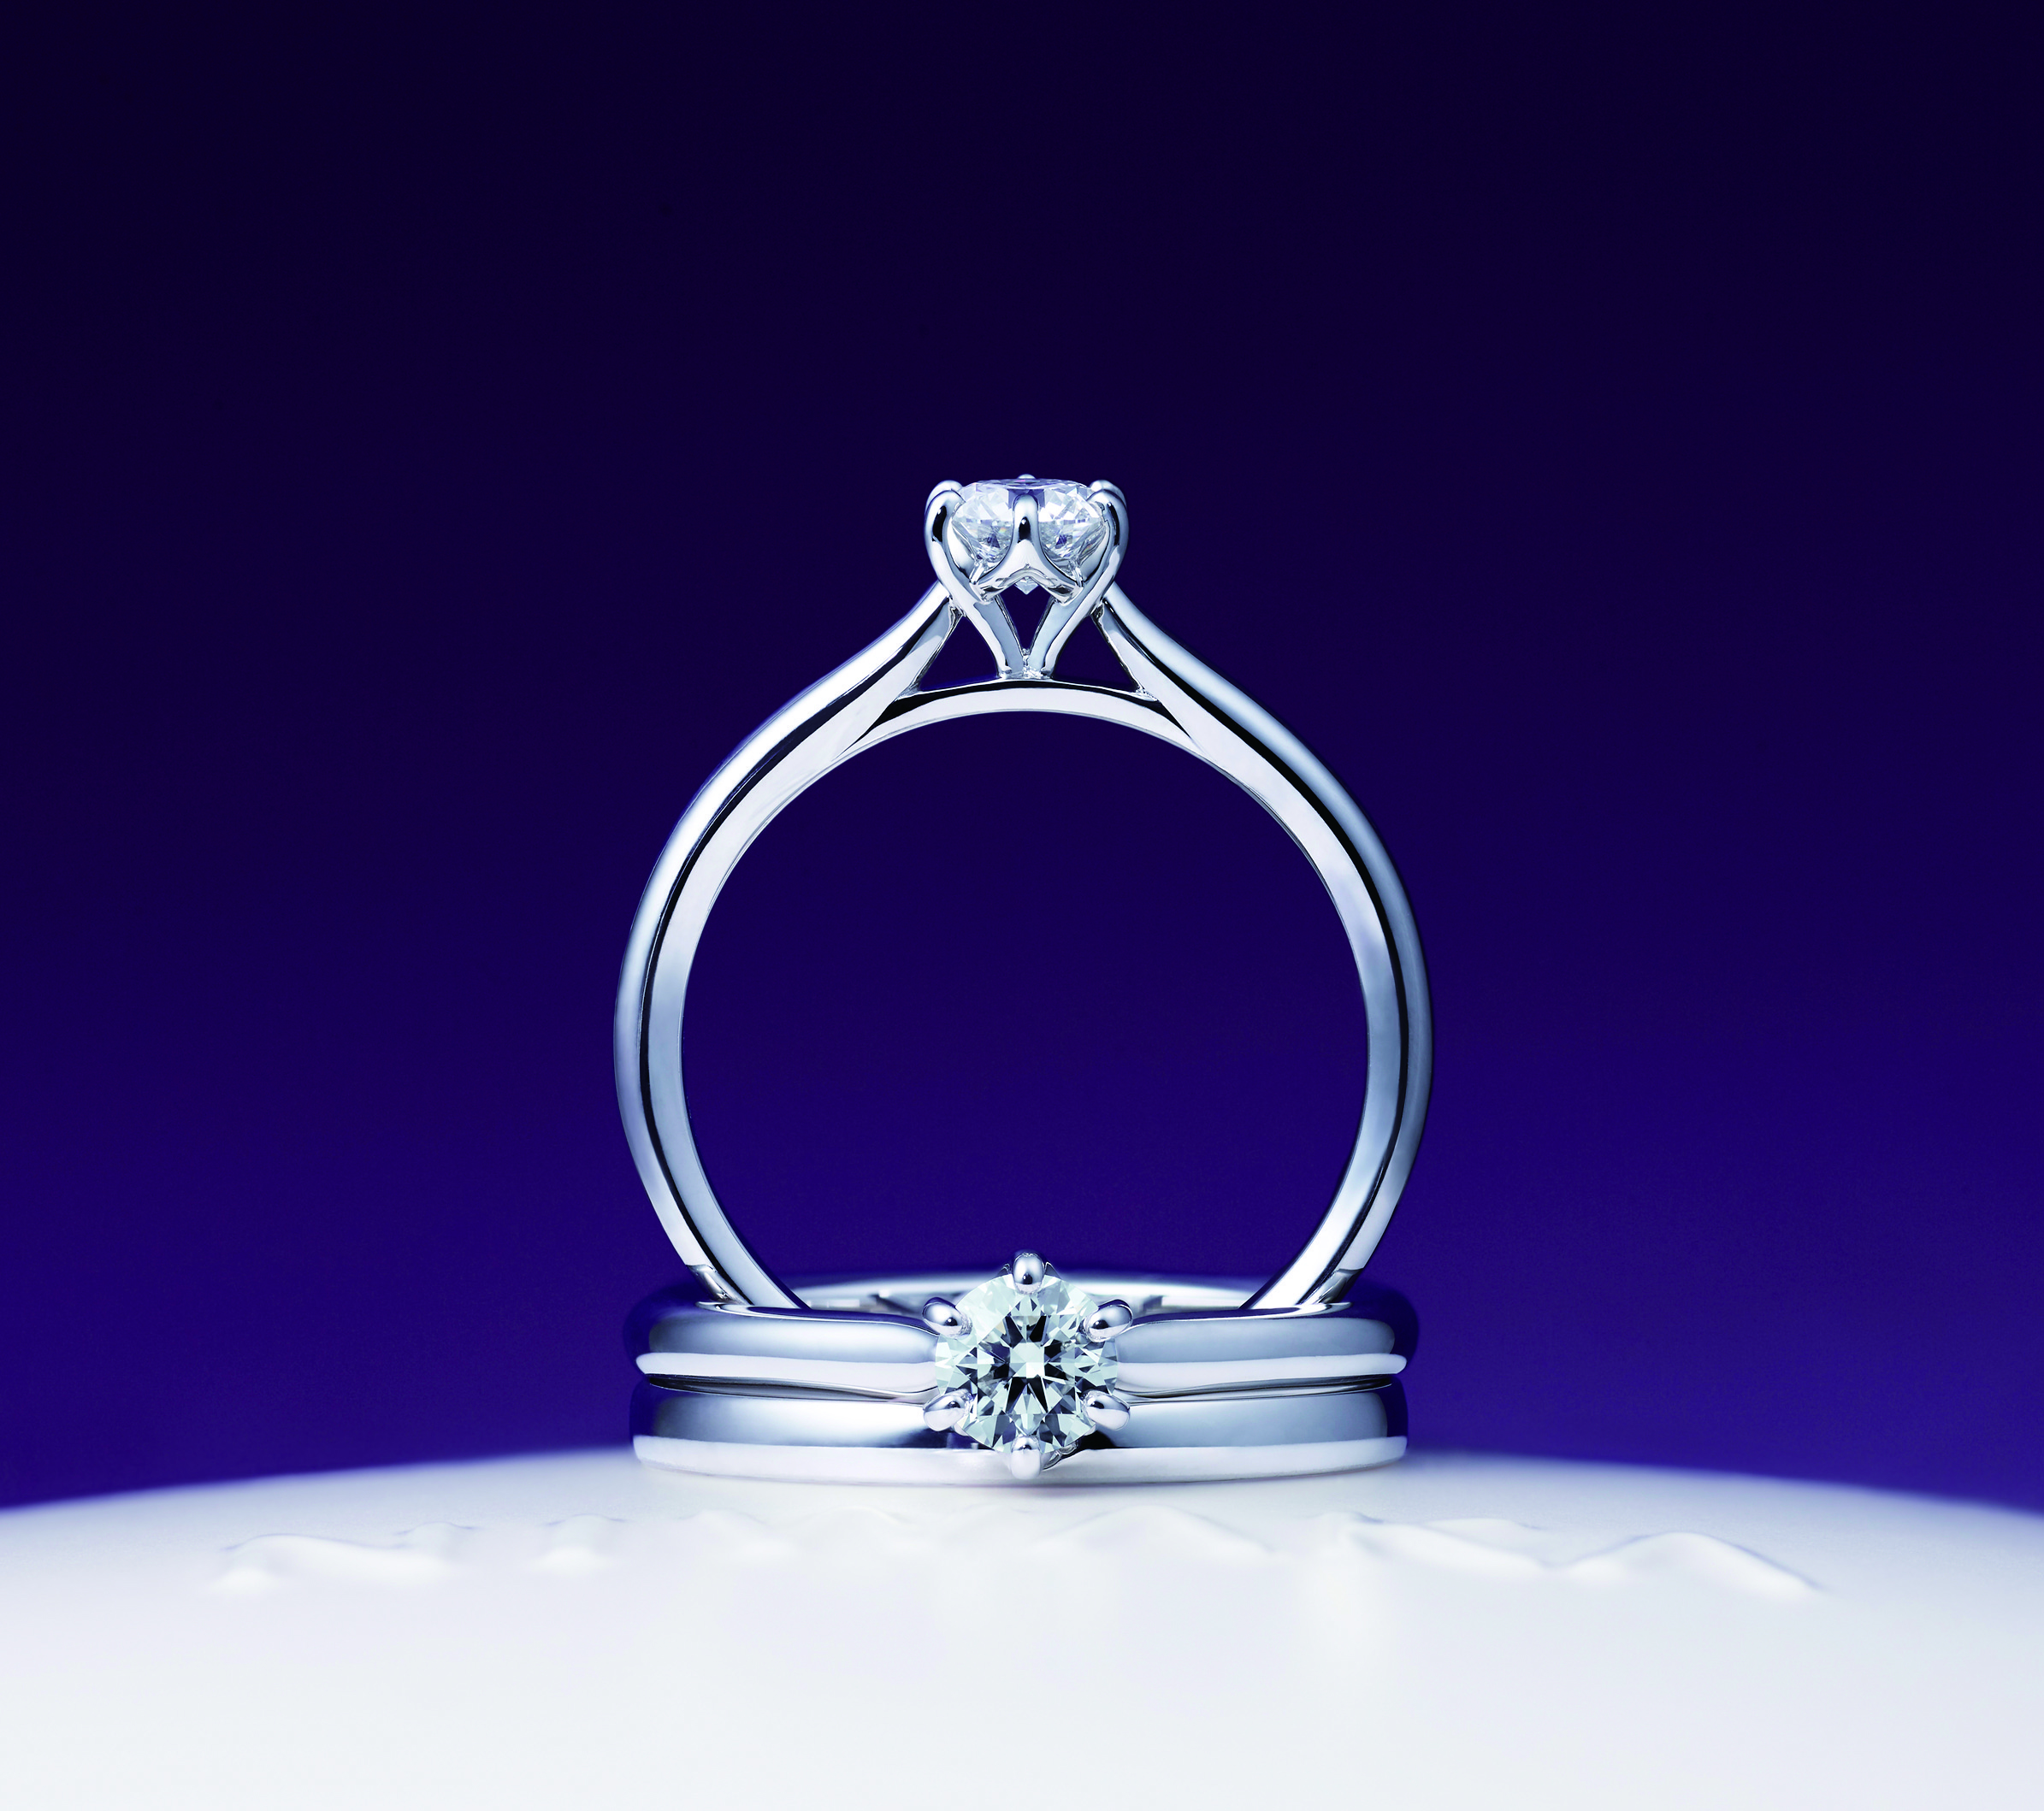 NIWAKAの婚約指輪・結婚指輪「ことほぎ」